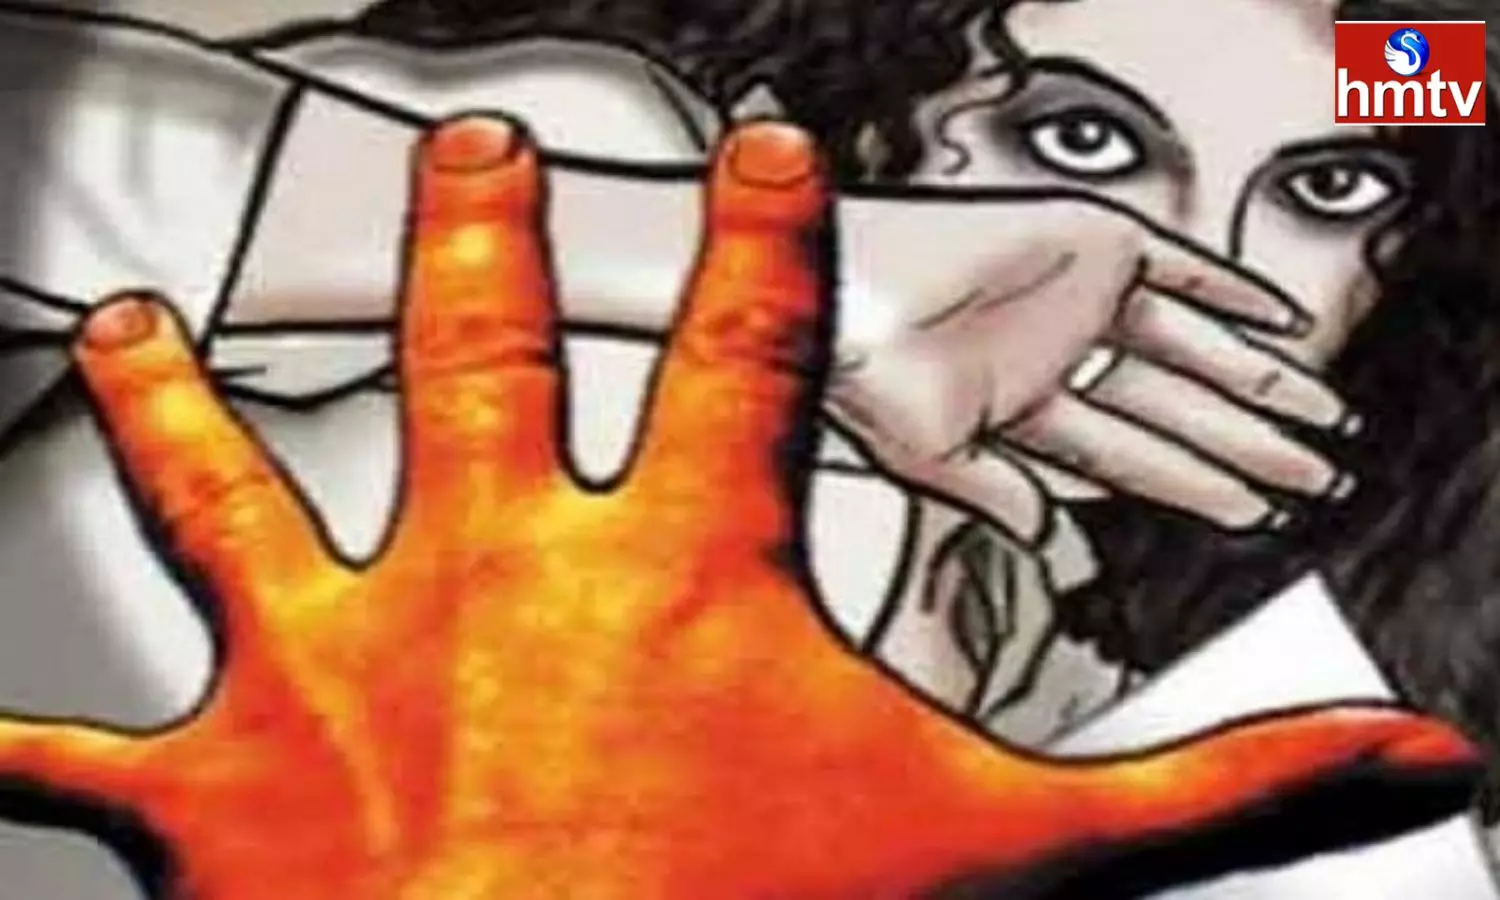 A Minor Girl From Madhya Pradesh Was Raped By 4 Members In Peddapalli